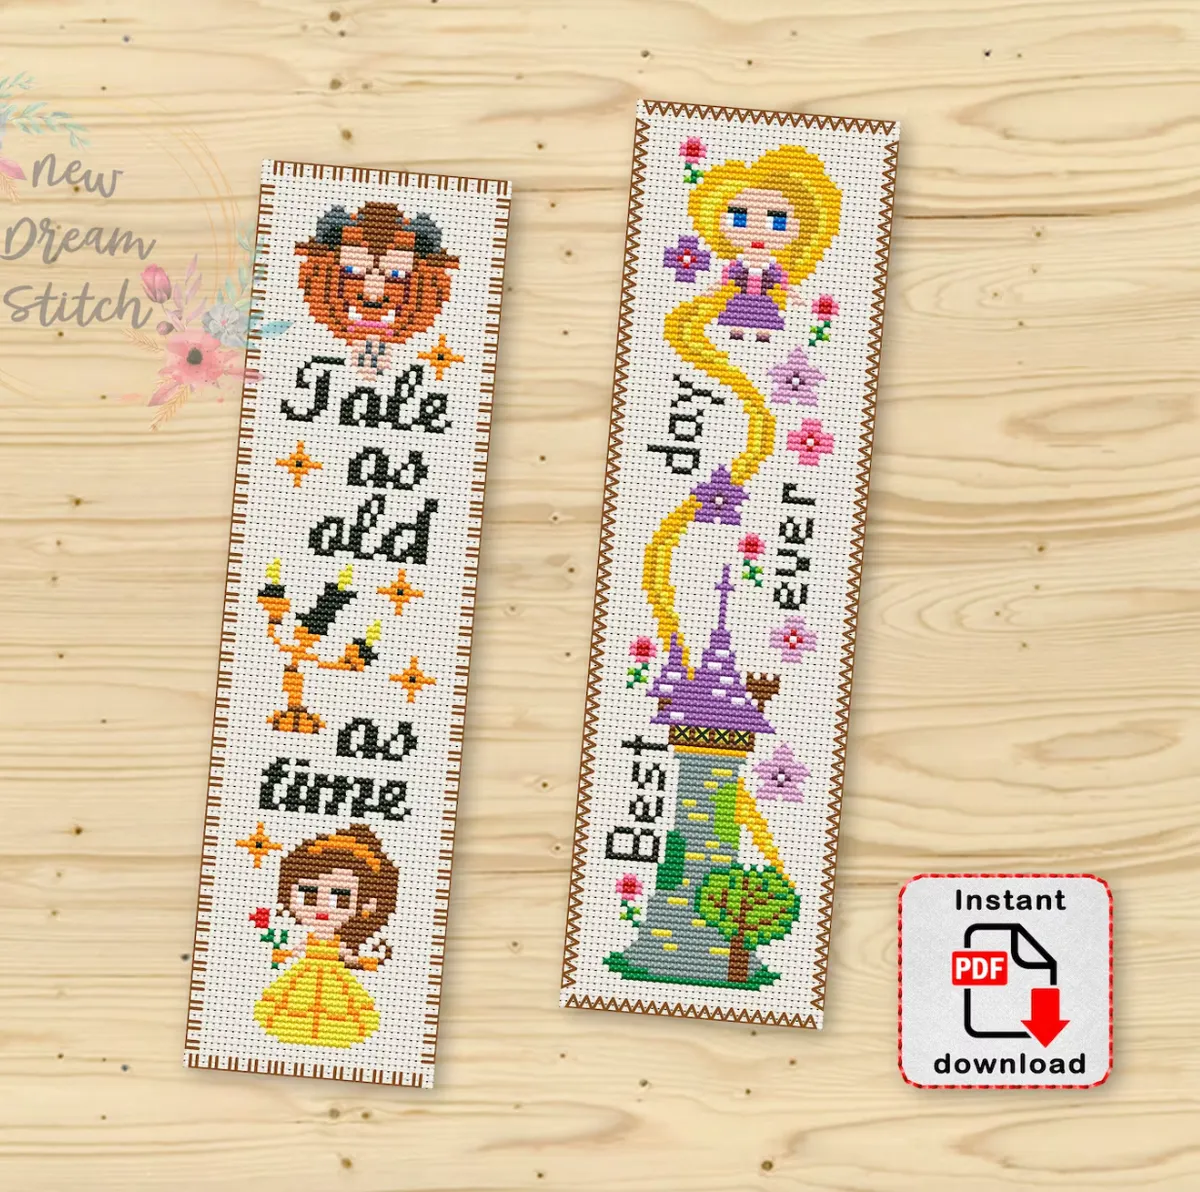 Disney princess cross stitch bookmark